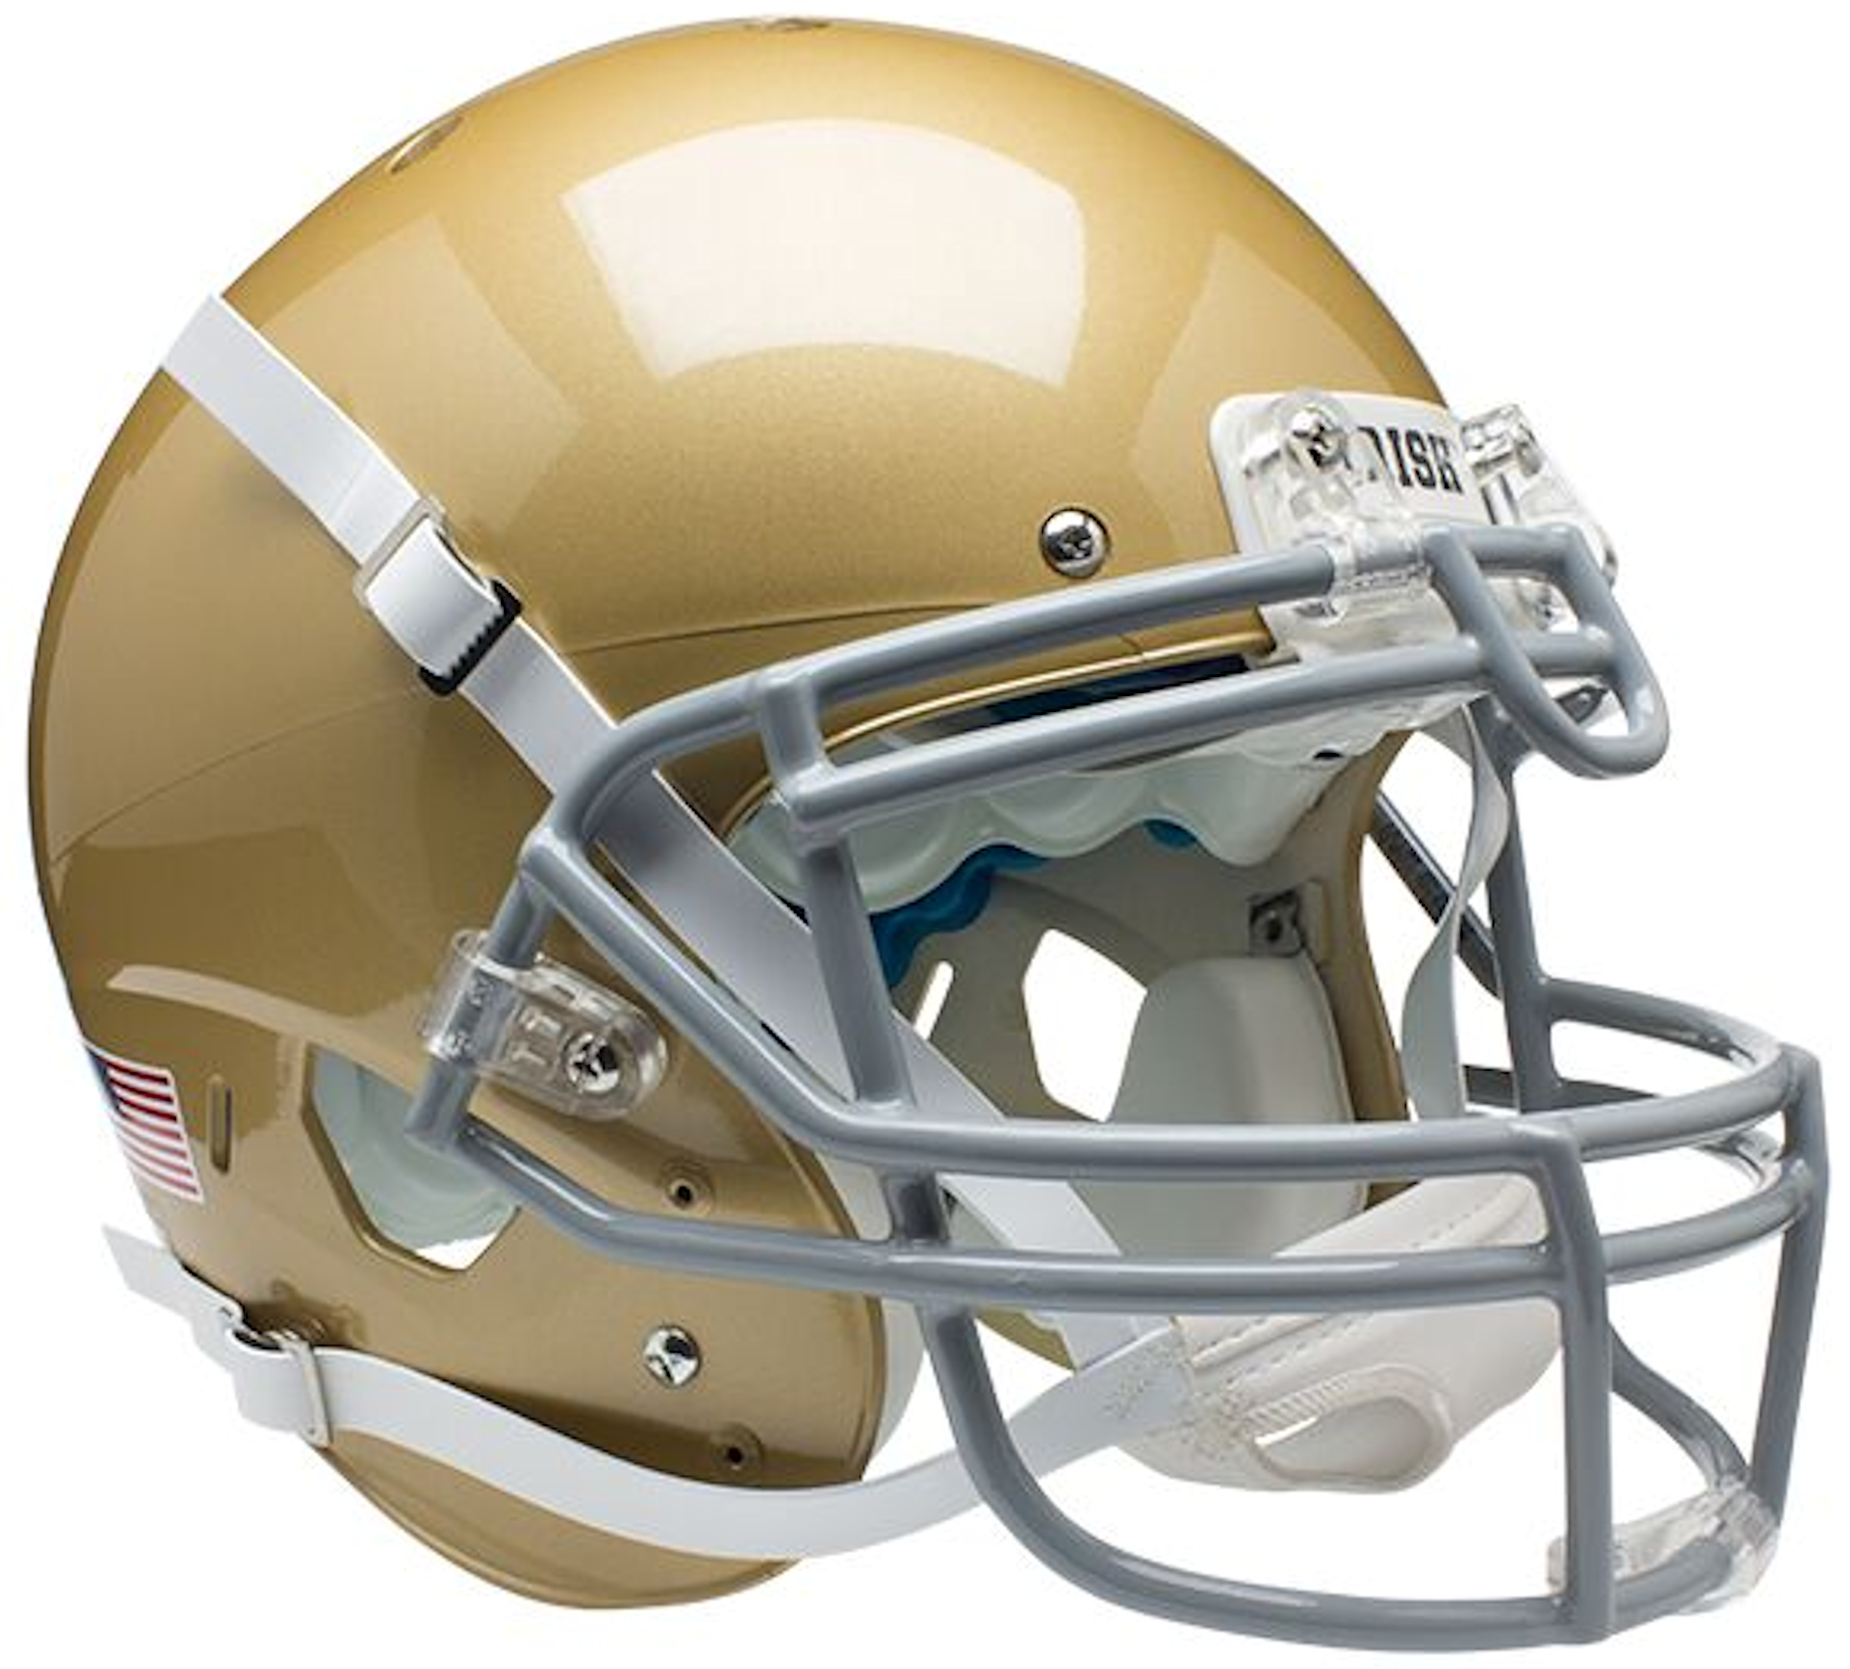 Notre Dame Fighting Irish Authentic College XP Football Helmet Schutt